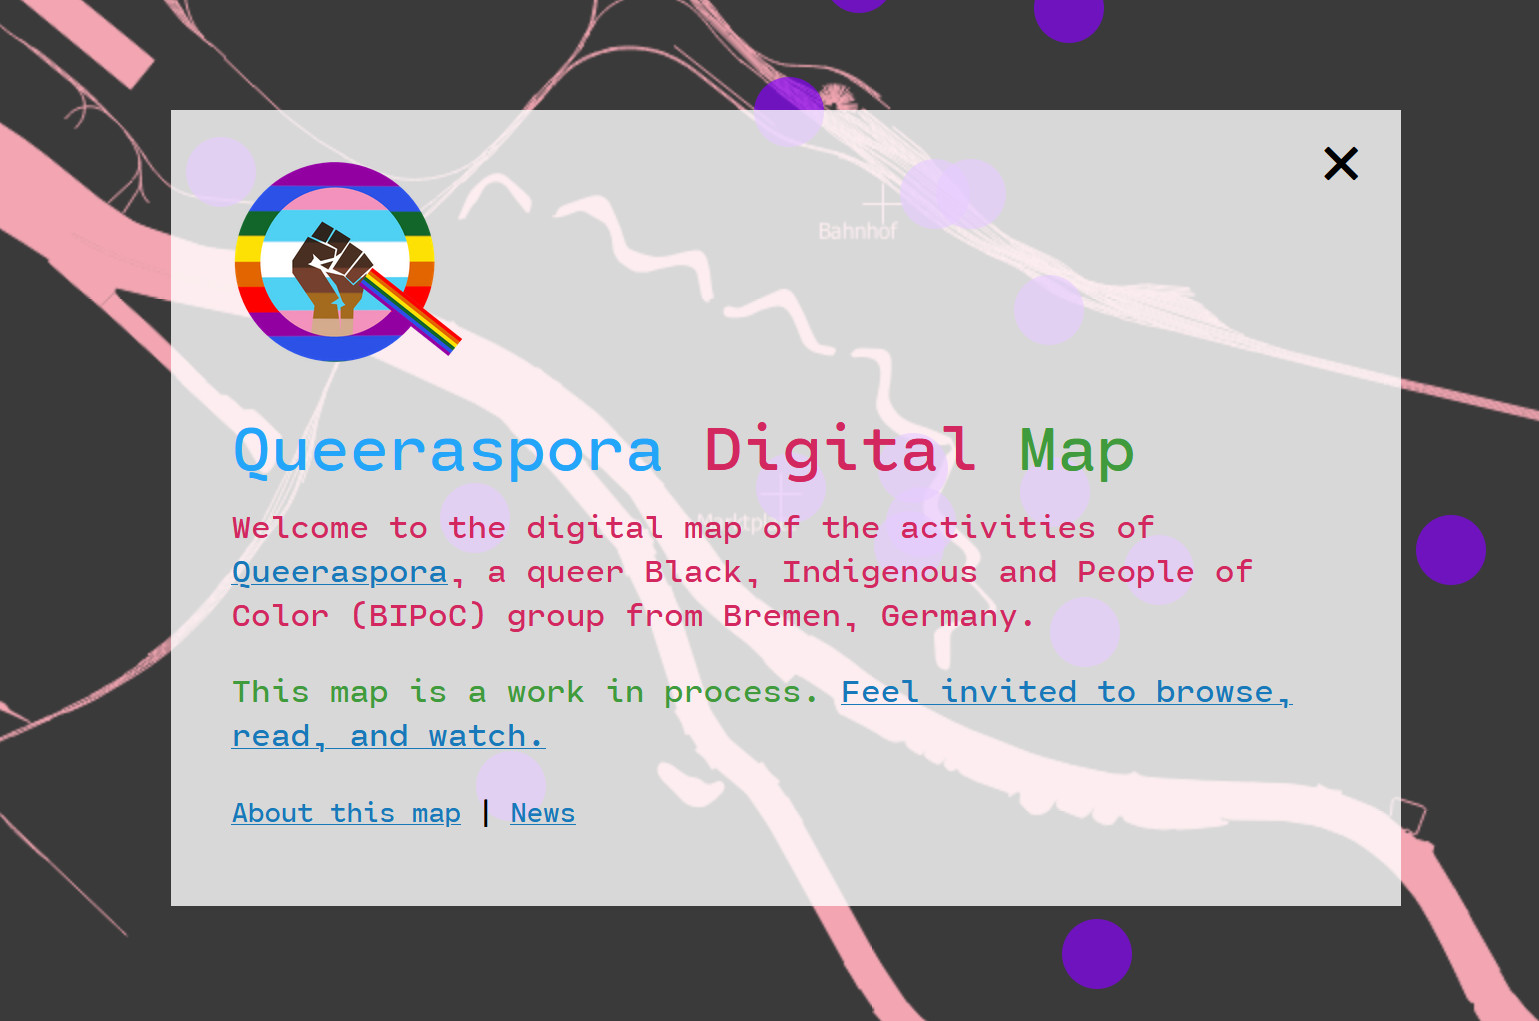 Screenshot of the opening screen of the Queeraspora digital map